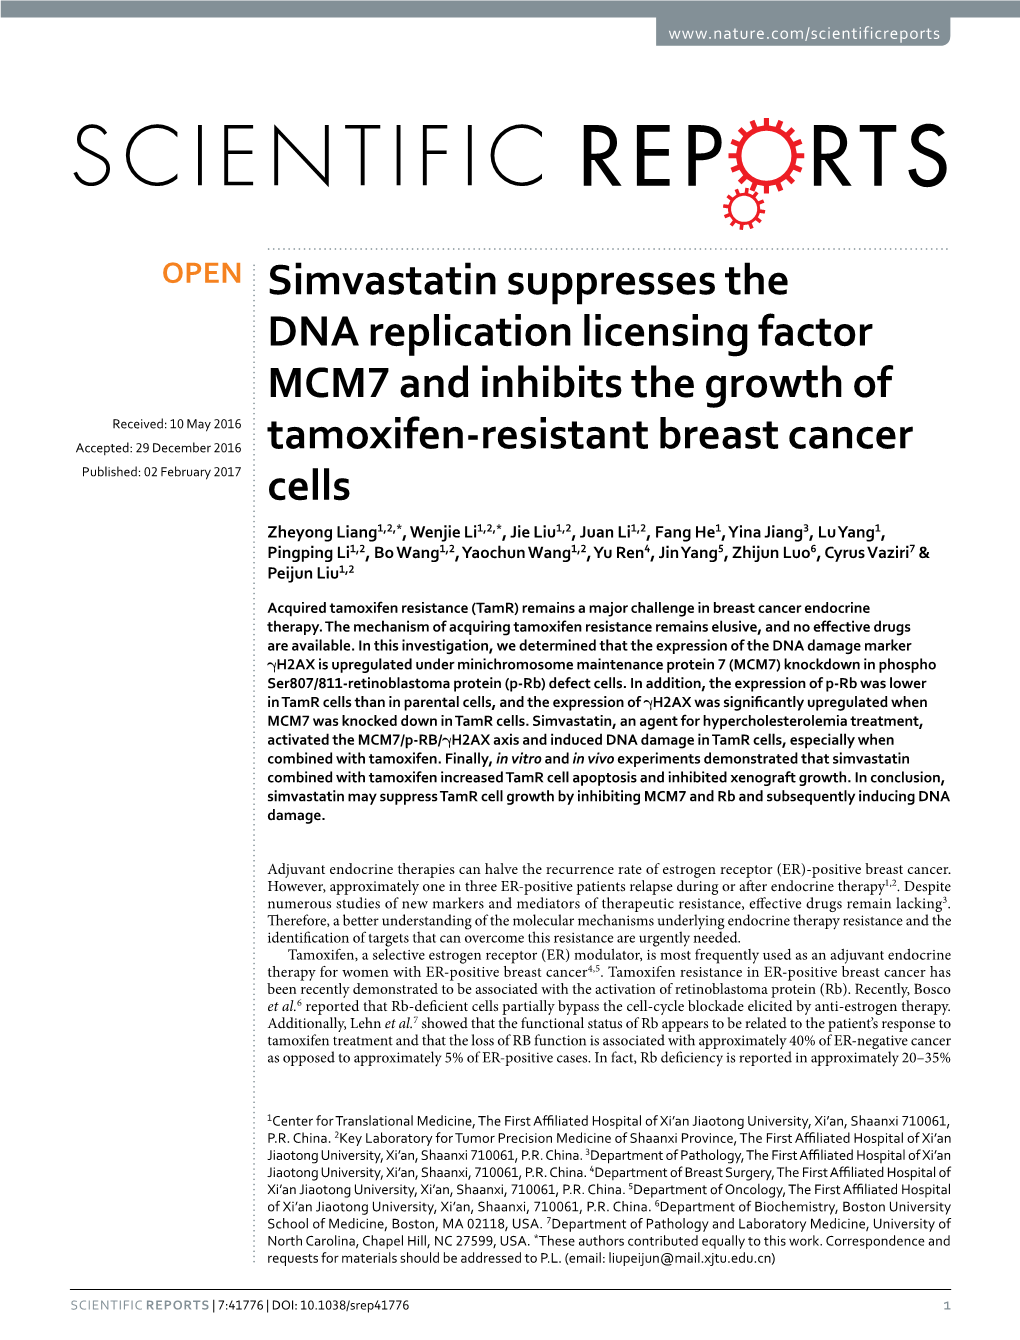 Simvastatin Suppresses the DNA Replication Licensing Factor MCM7